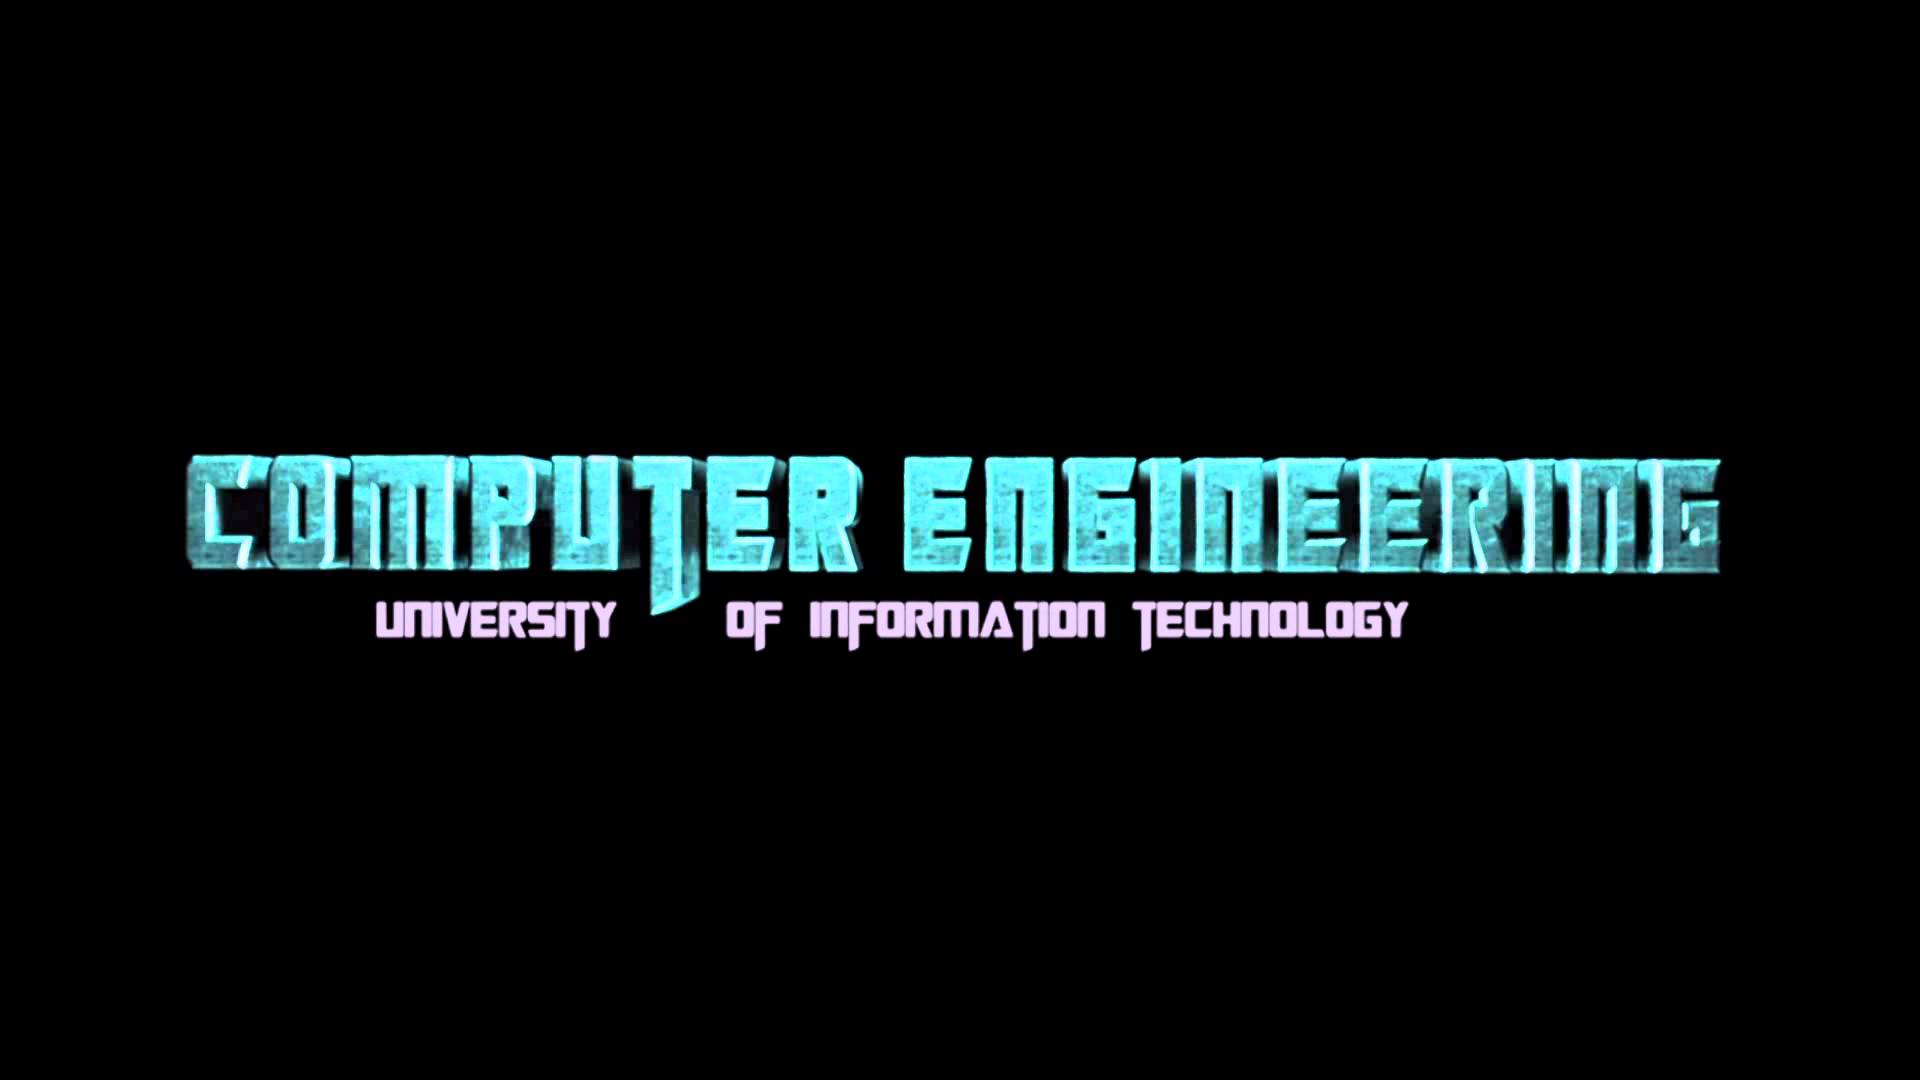 Computer Engineer Wallpaper Free Computer Engineer